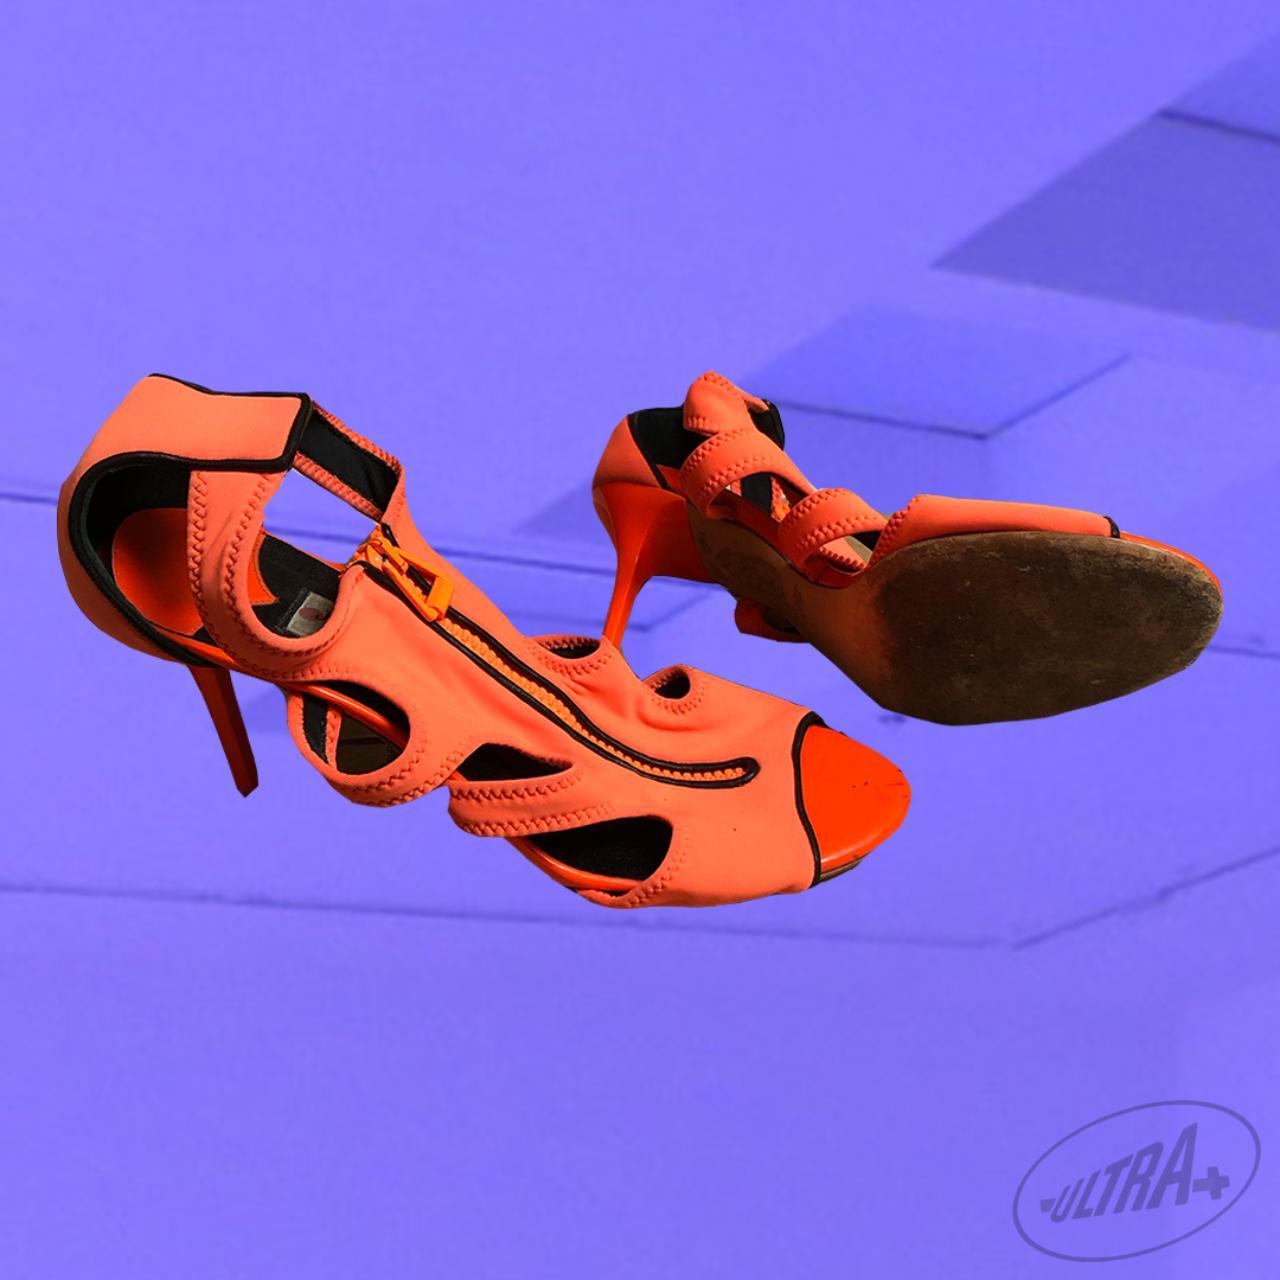 Product Image 1 - Jimmy Choo orange neoprene heels.